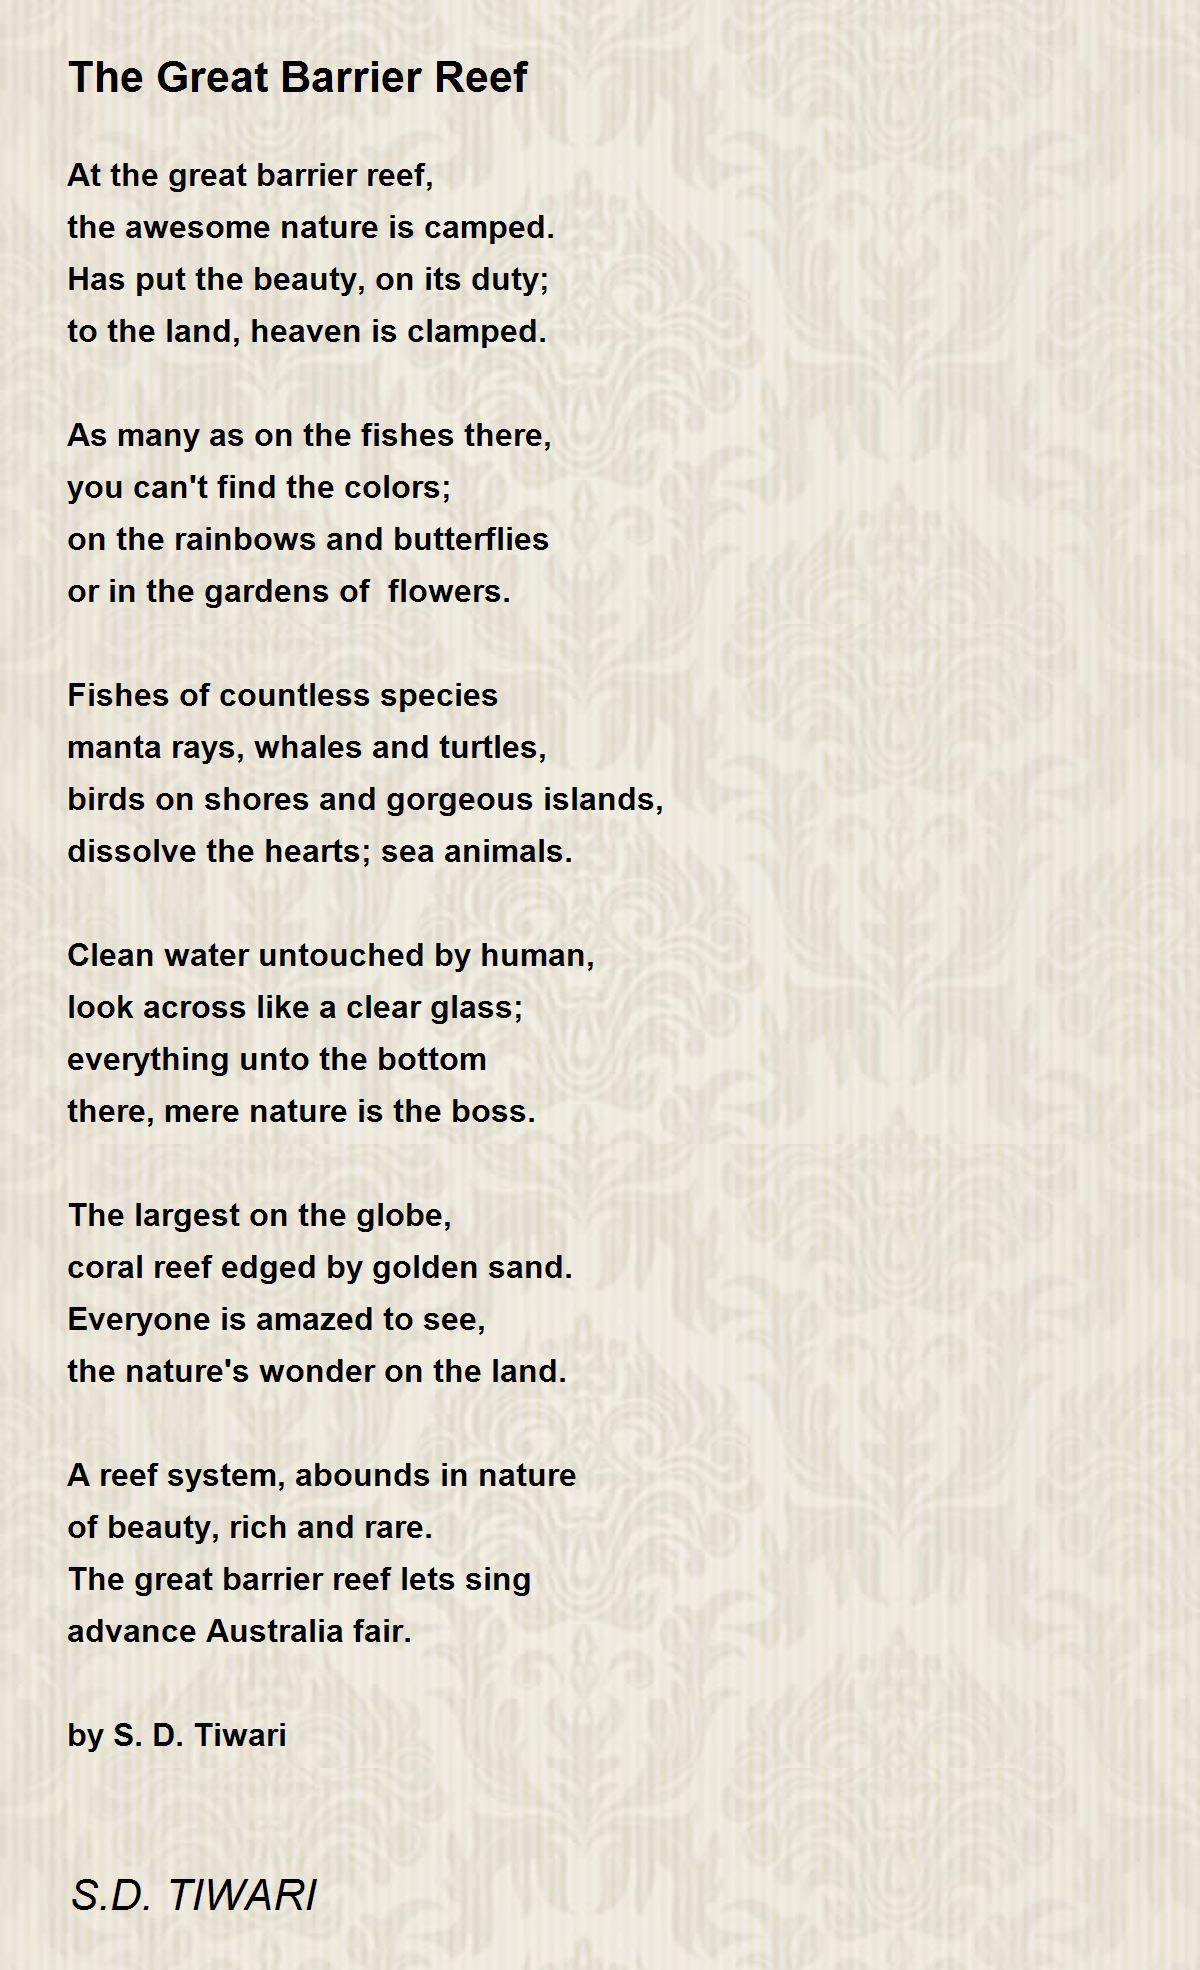 The Great Barrier Reef Poem by S.D. TIWARI - Poem Hunter